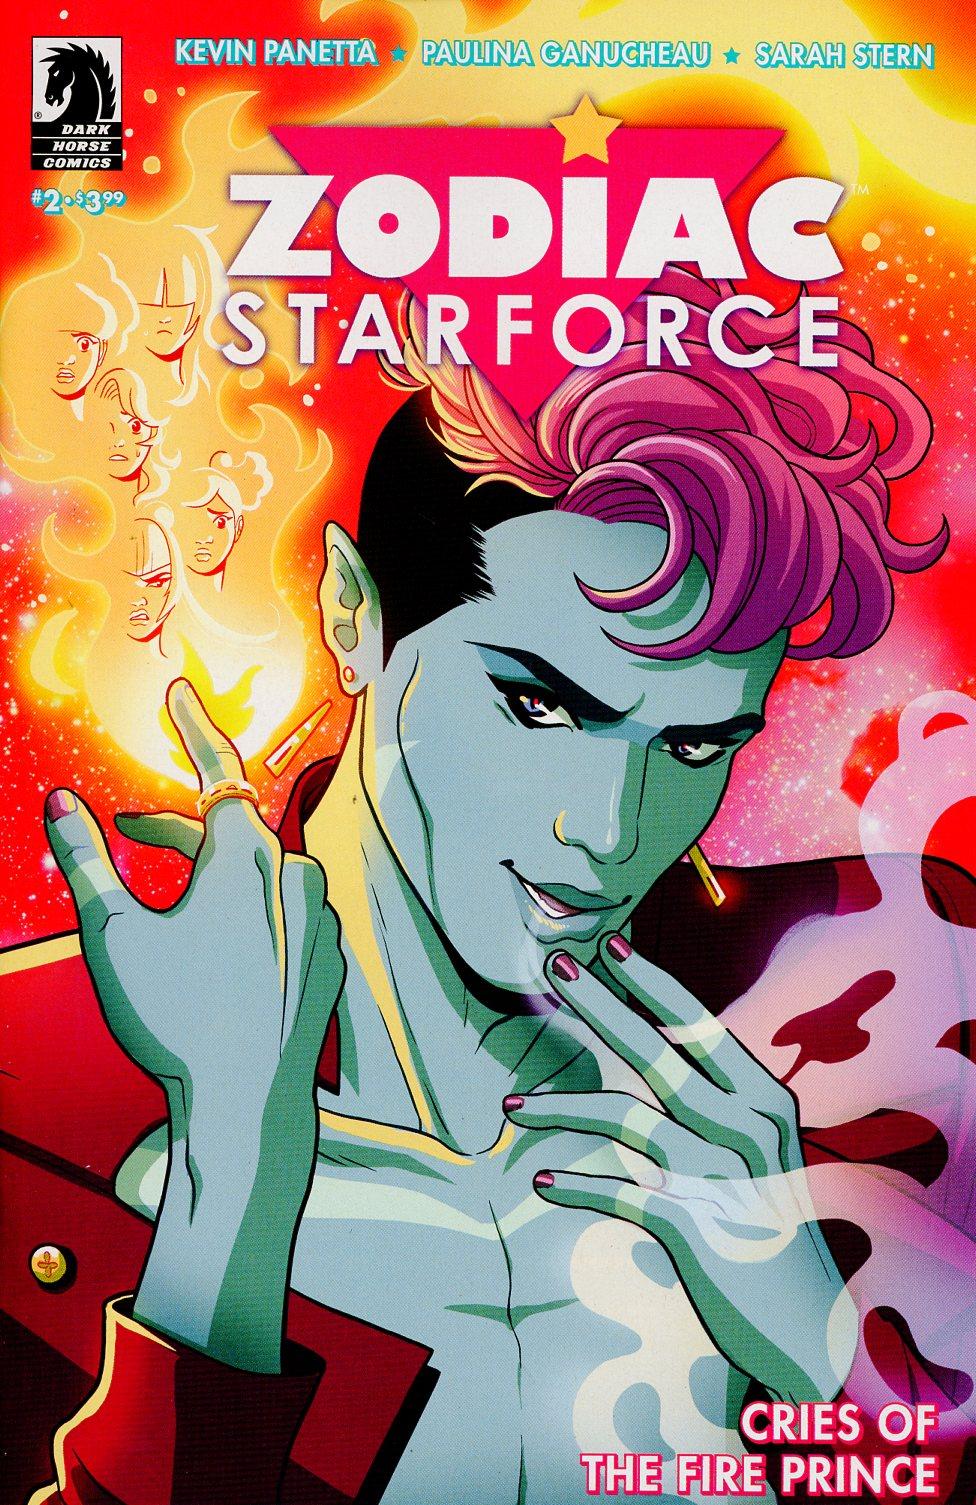 Zodiac Starforce Cries Of The Fire Prince Vol. 1 #2